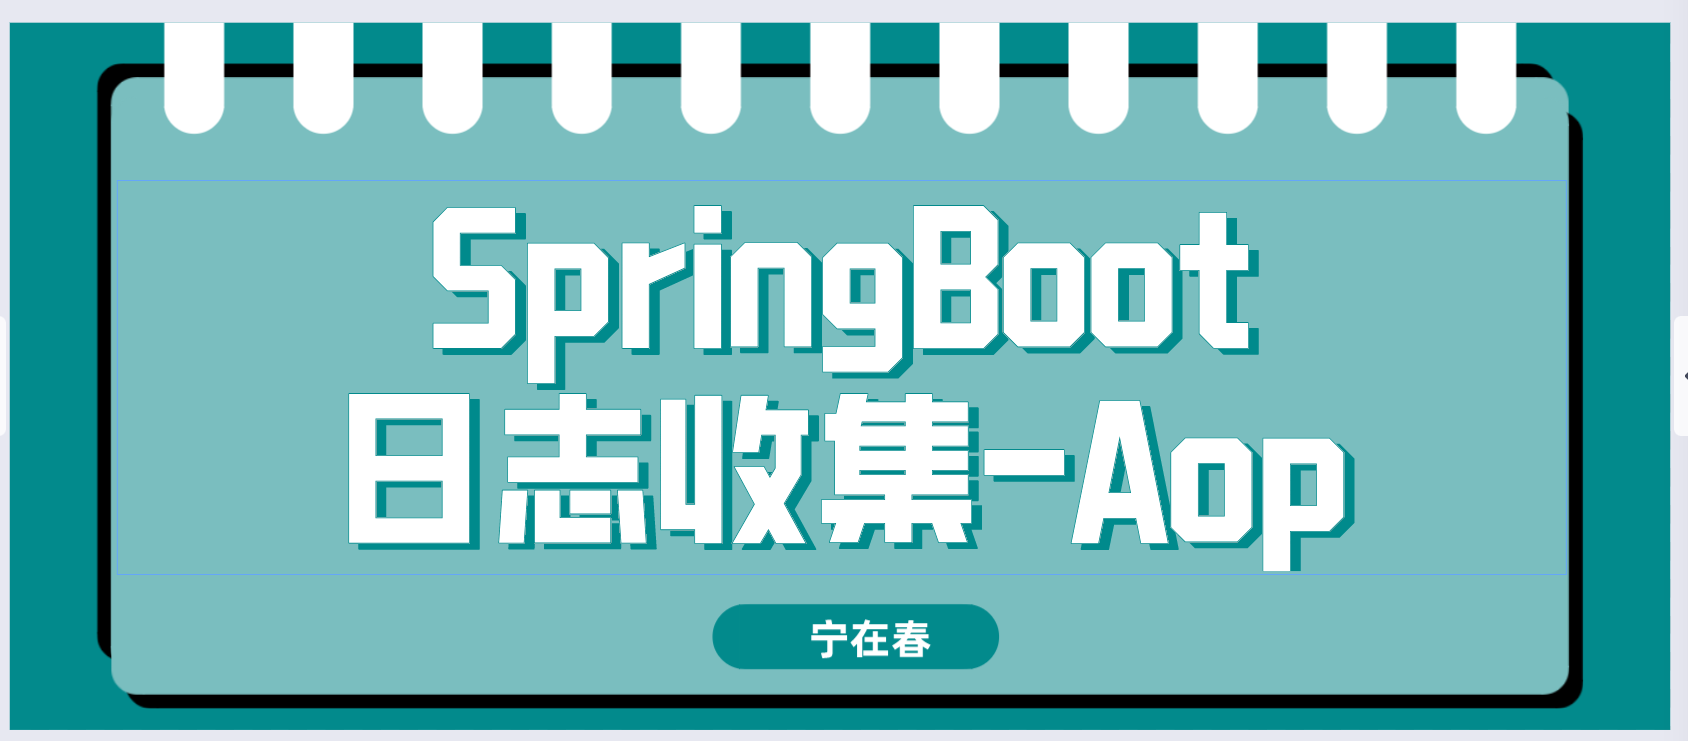 SpringBoot日志收集-Aop方式-存进数据库